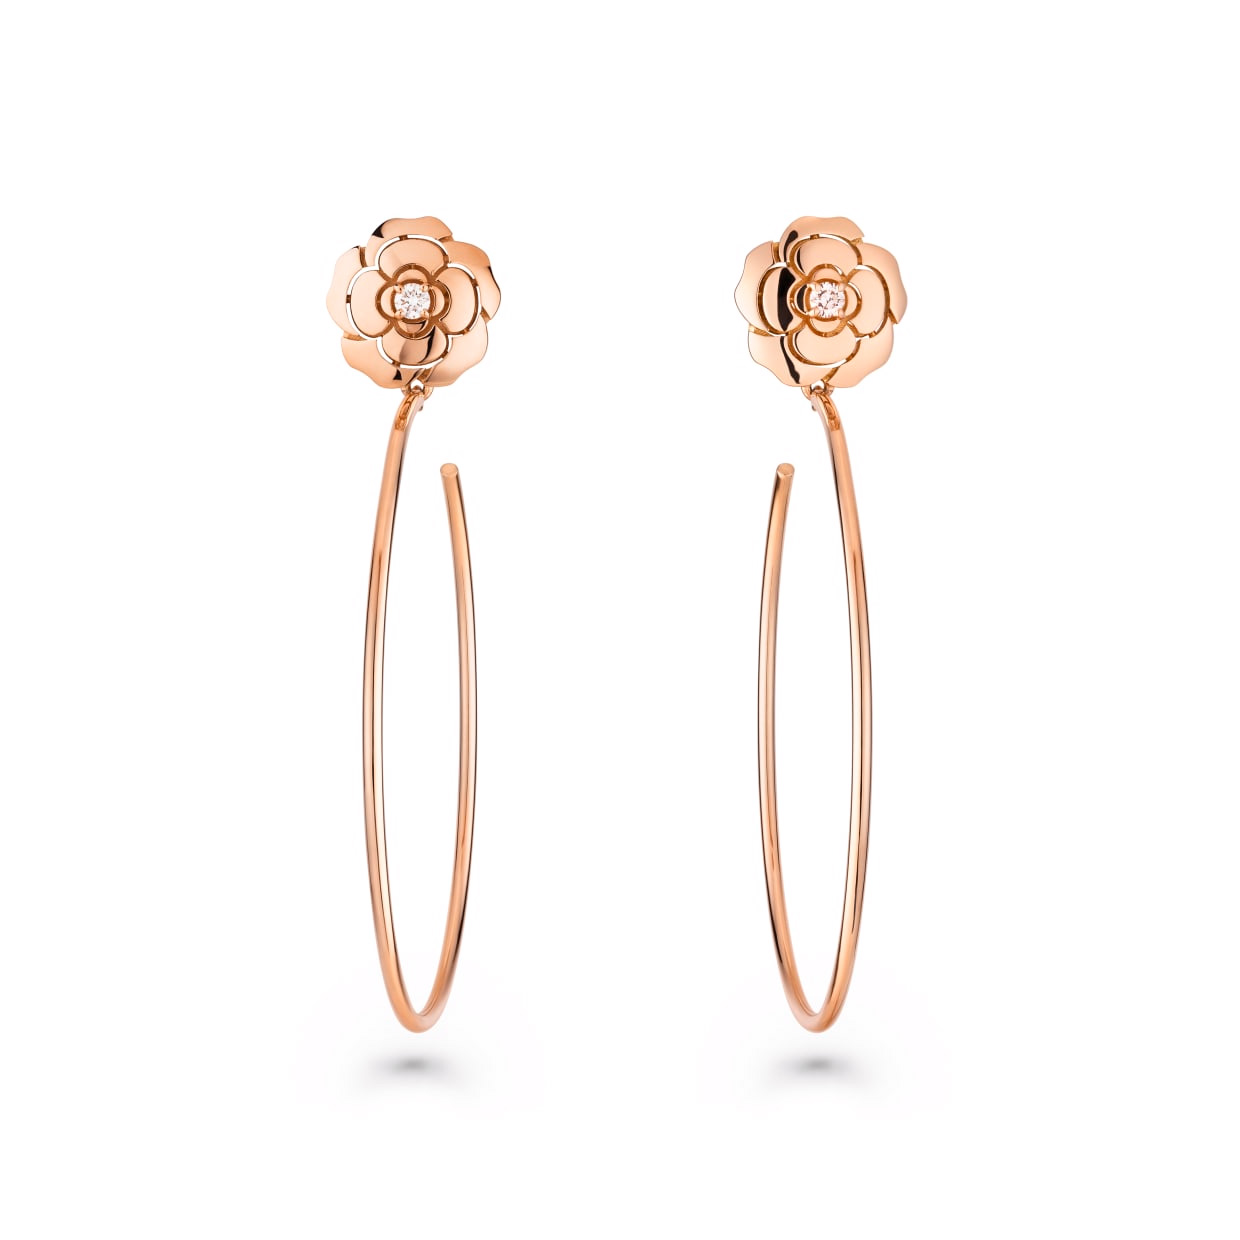 OEM/ODM Jewelry Custom earrings Silver Jewelry Design 18K pink gold plating silver jewelry OEM